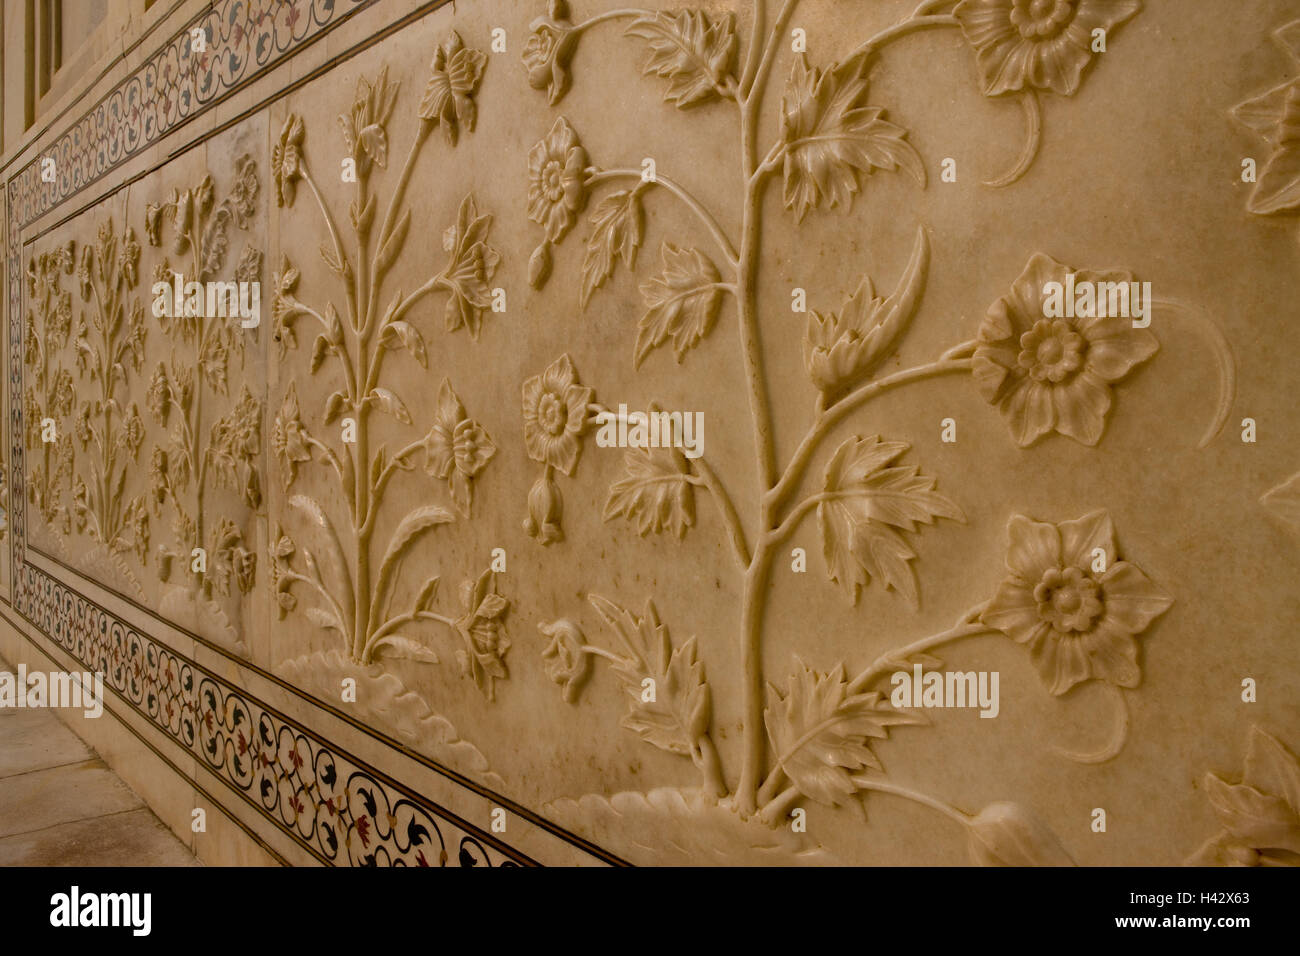 India, Uttar Pradesh, Agra, the Taj Mahal, wall relief, floral design, detail, Stock Photo